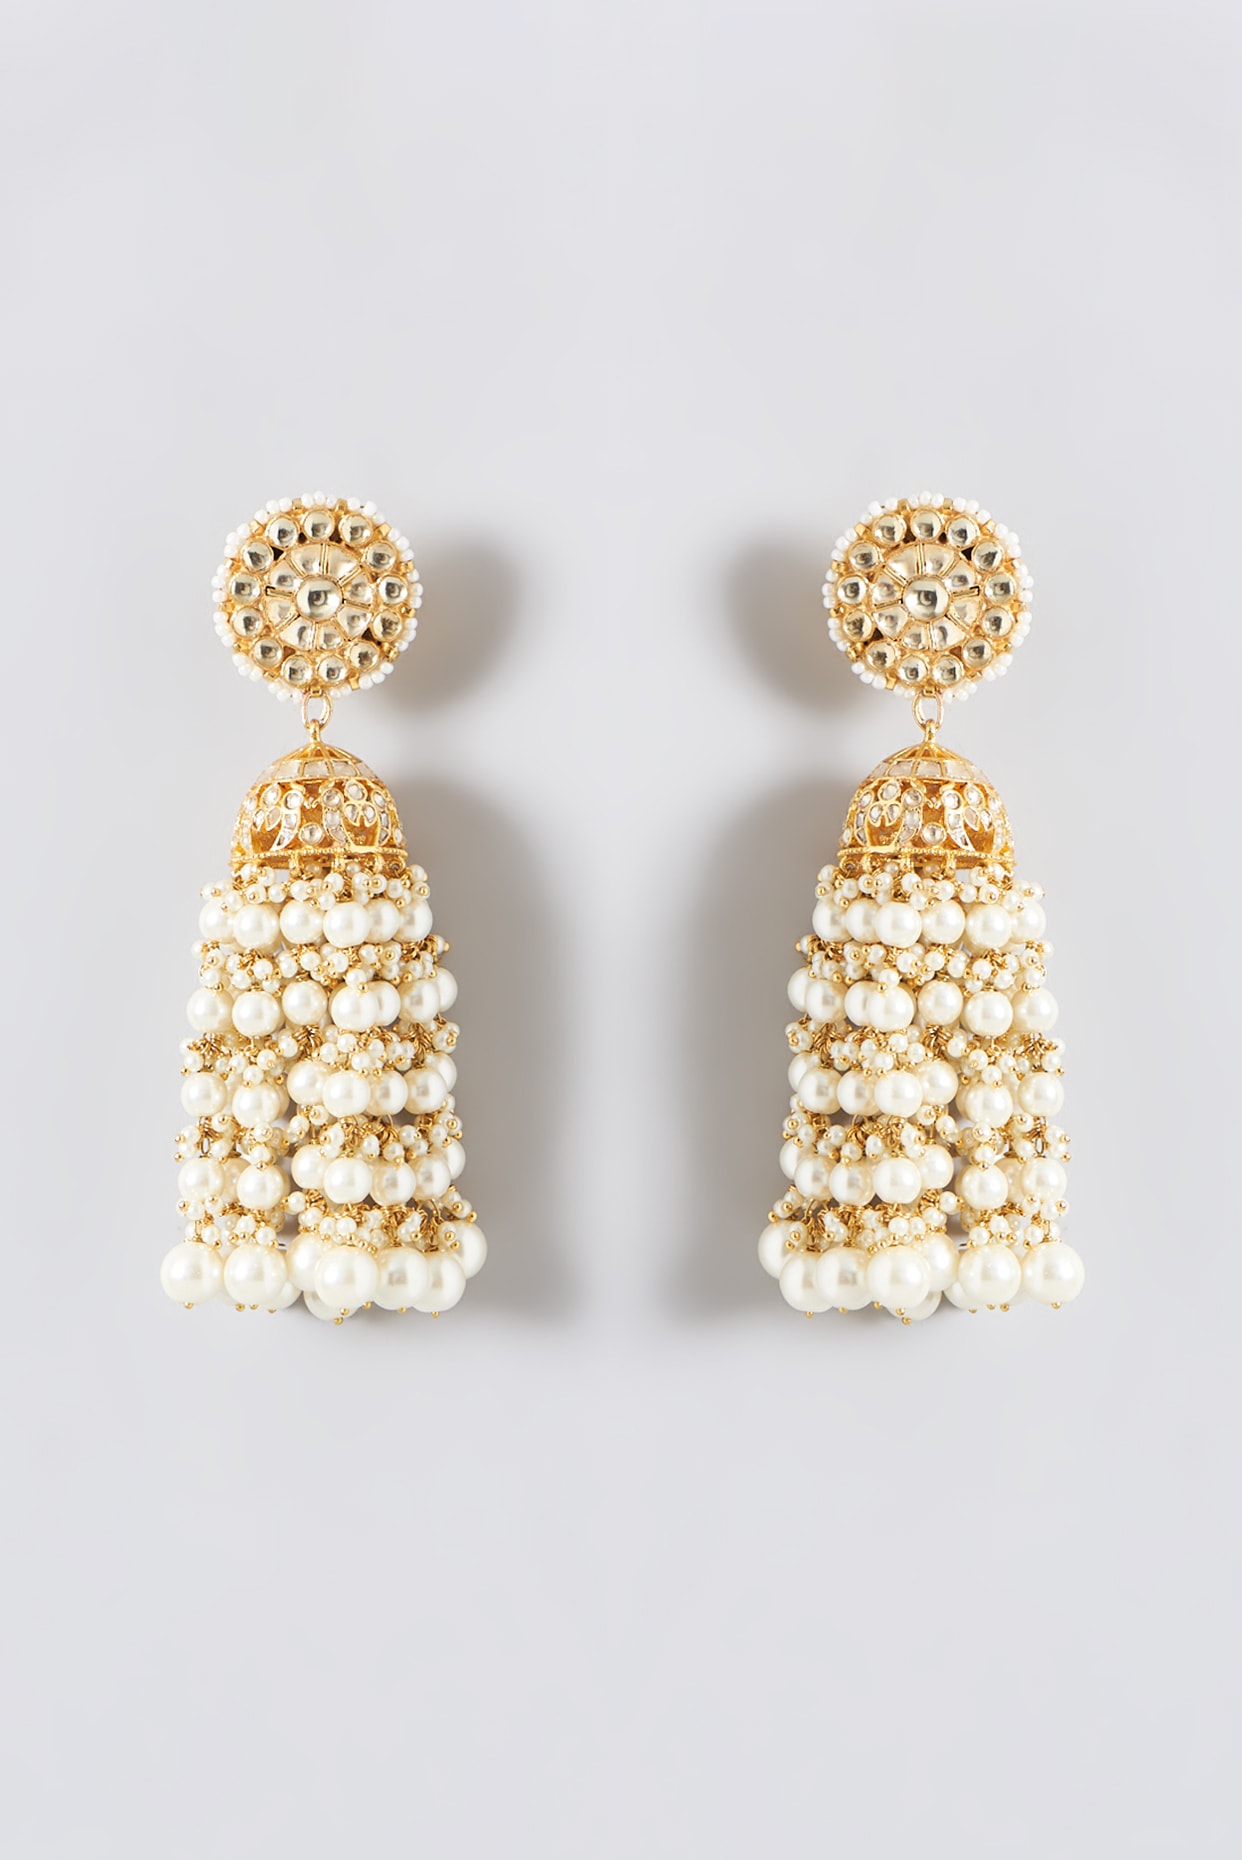 Latest Antique Gold Plated Traditional Small Pearl Jhumki Earring, गोल्ड  प्लेटेड इयररिंग, सोना चढ़ी कान की बाली - Lookethnic Handicrafts LLP, Mumbai  | ID: 27465574833